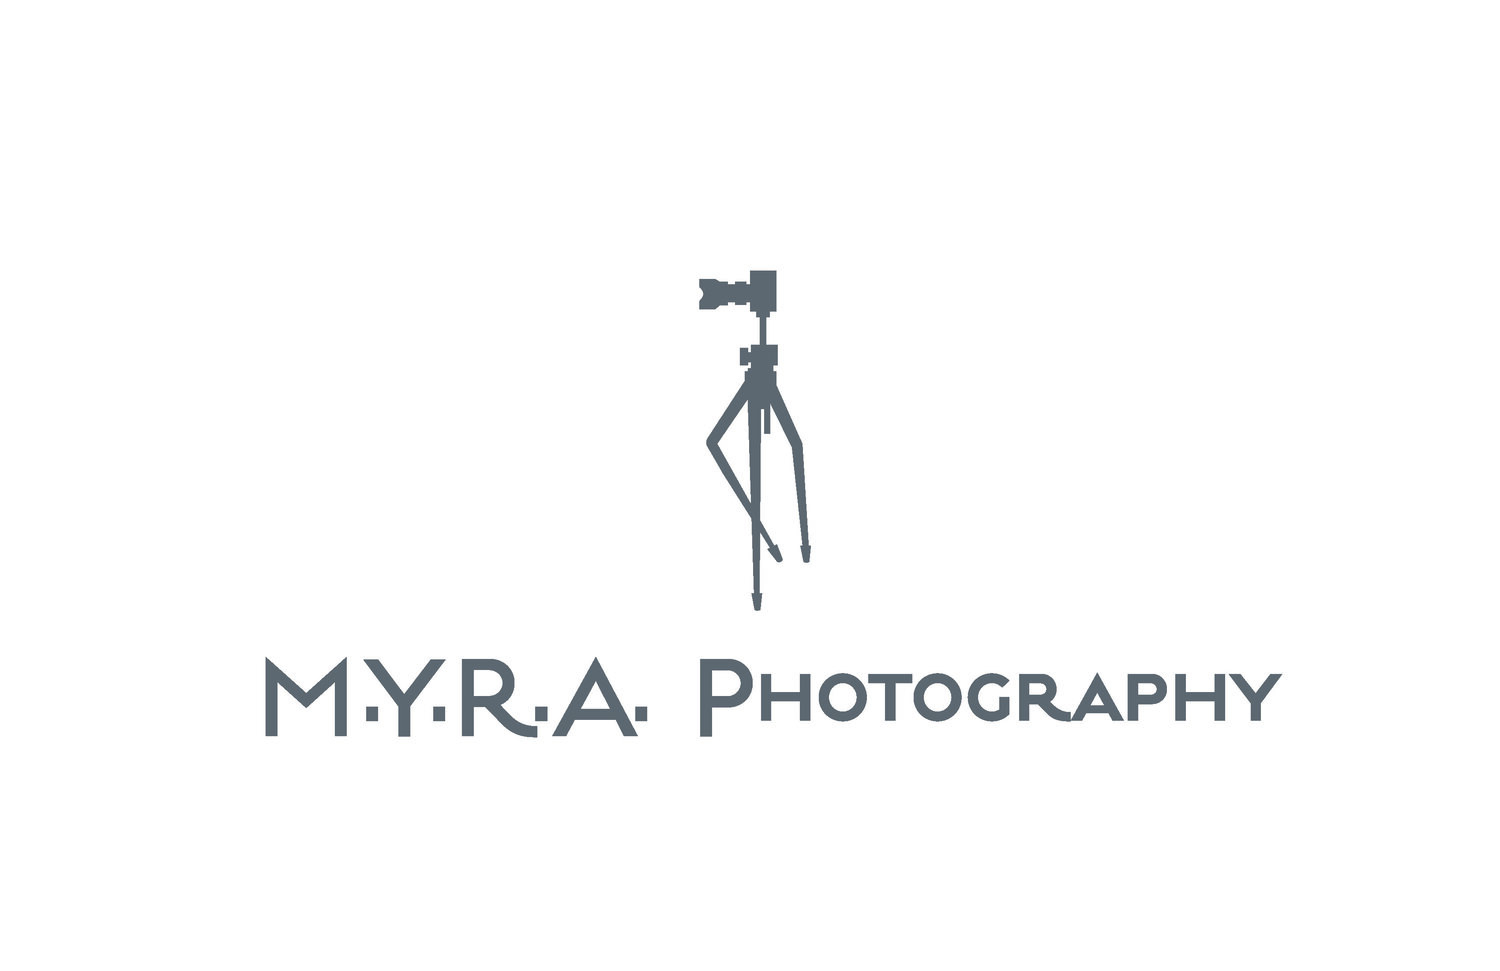 M.Y.R.A. PHOTOGRAPHY